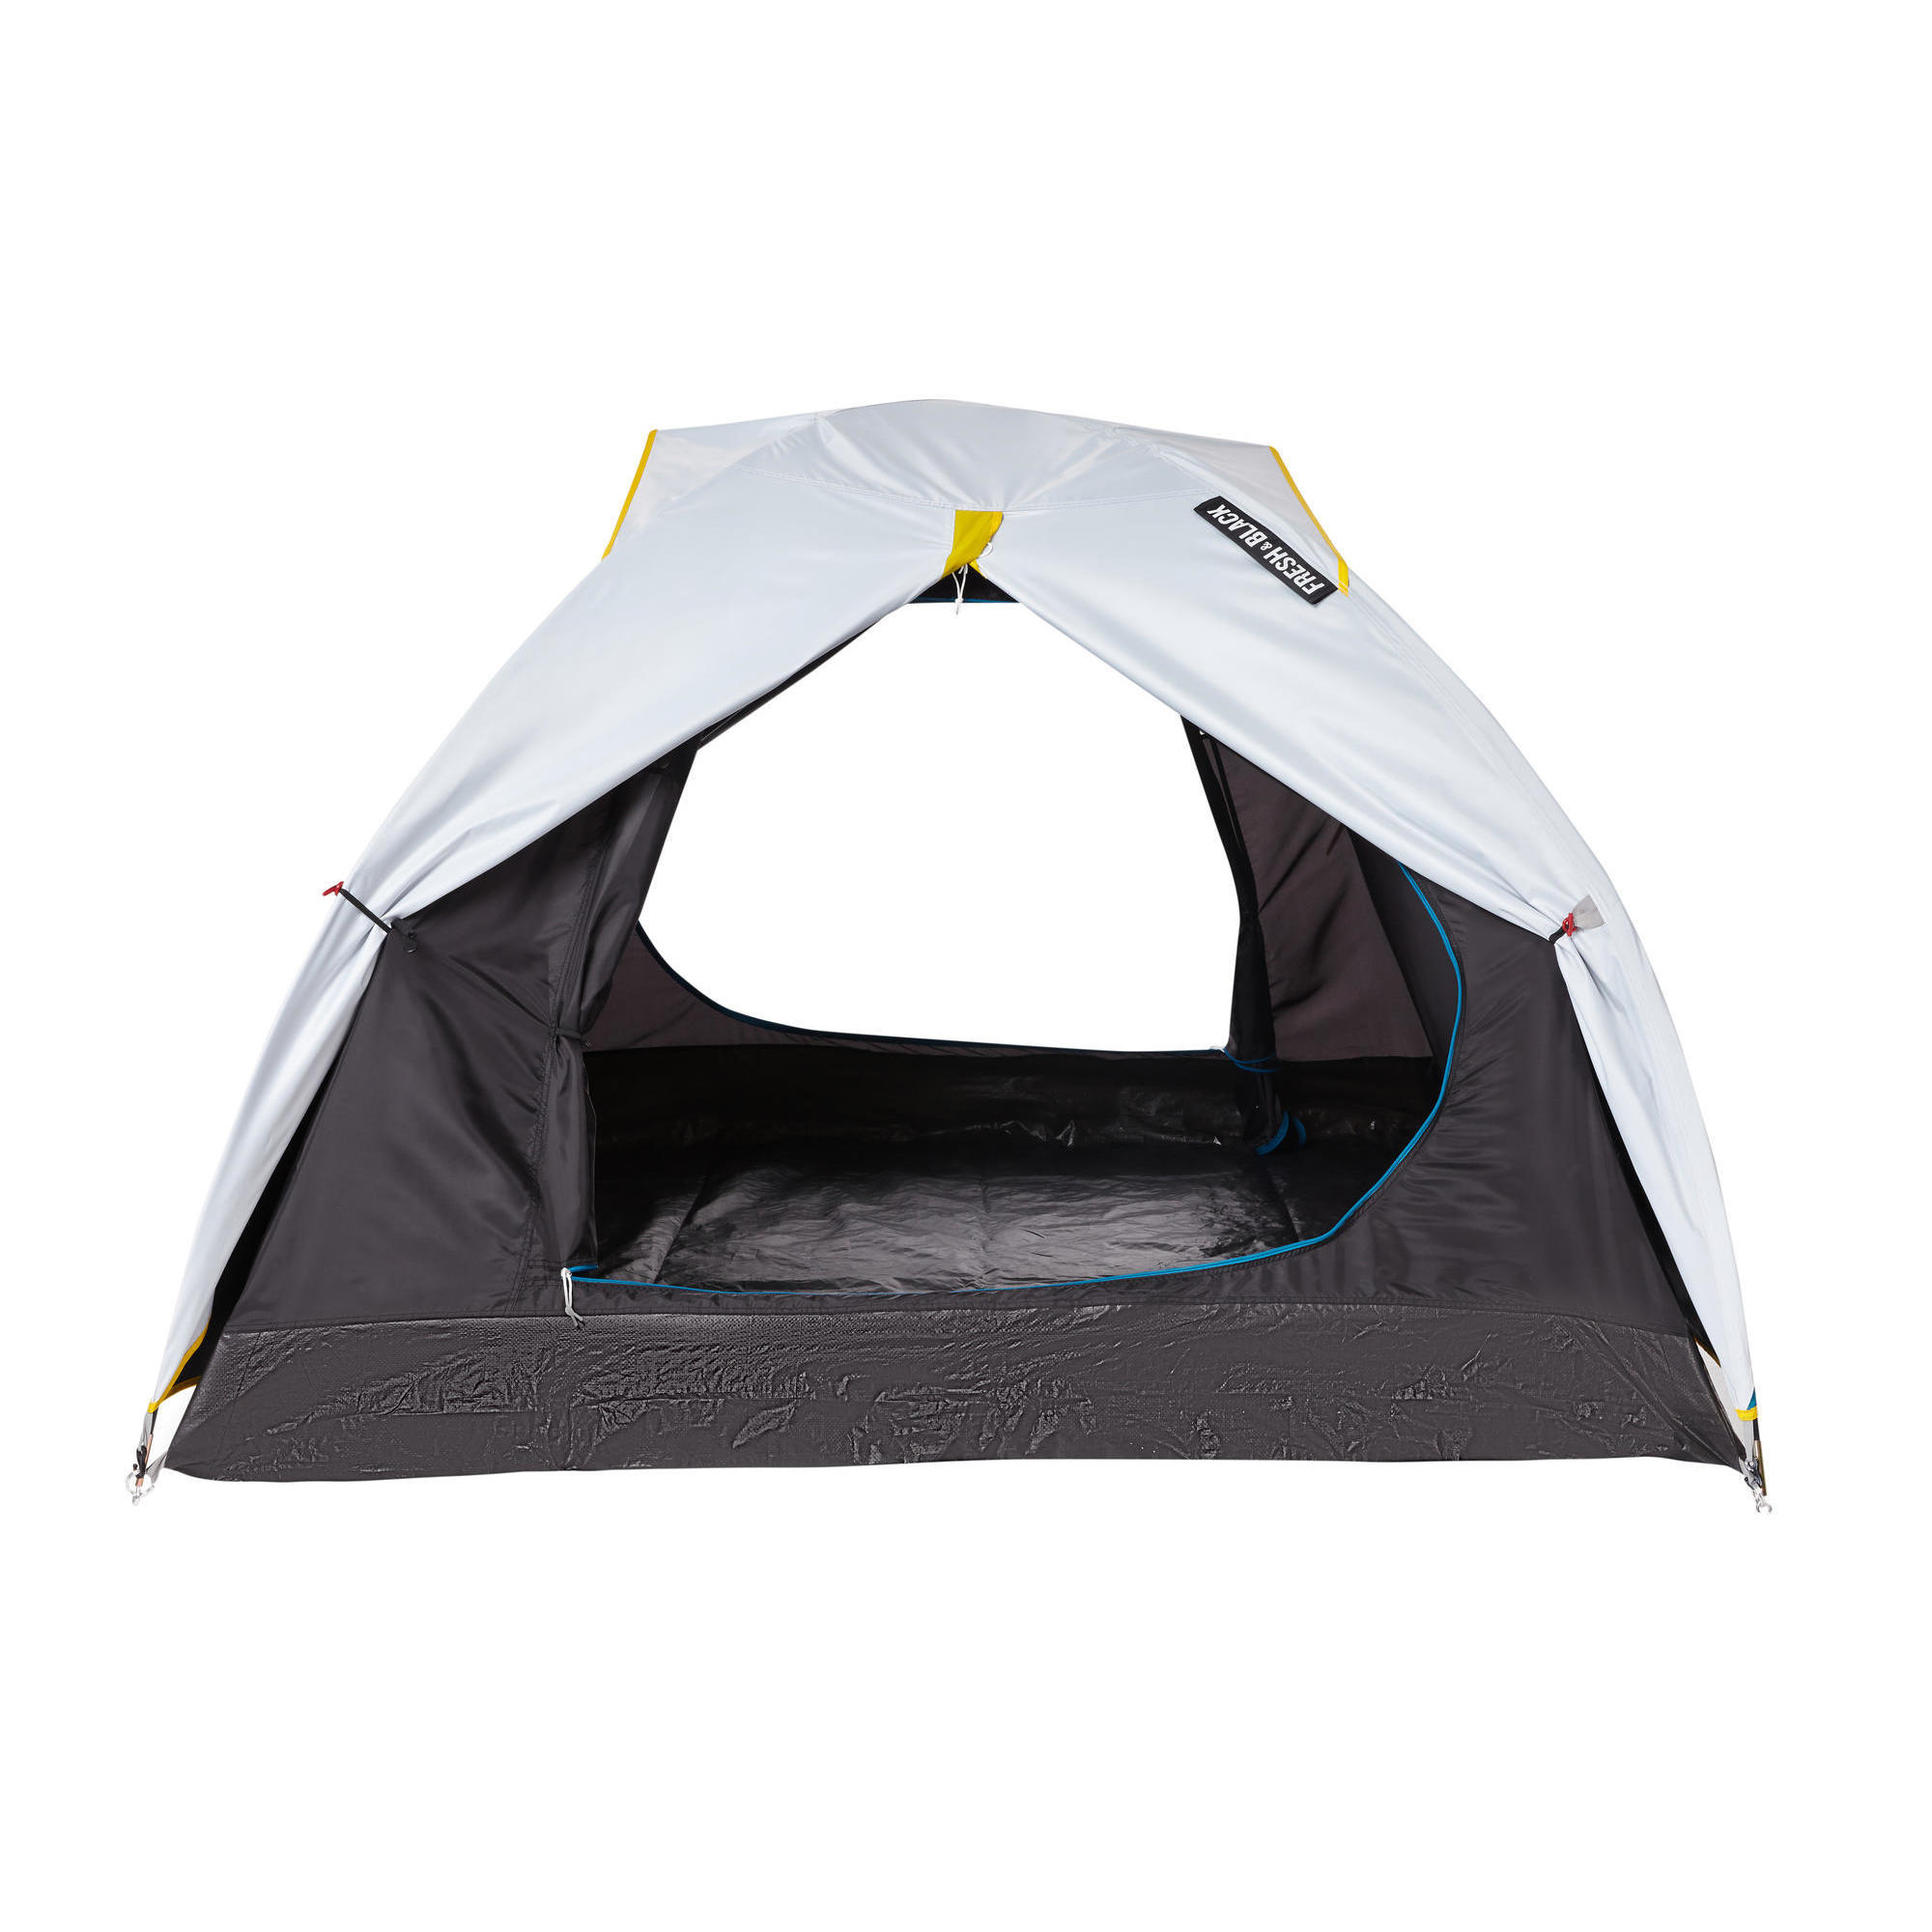 decathlon fresh and black tent